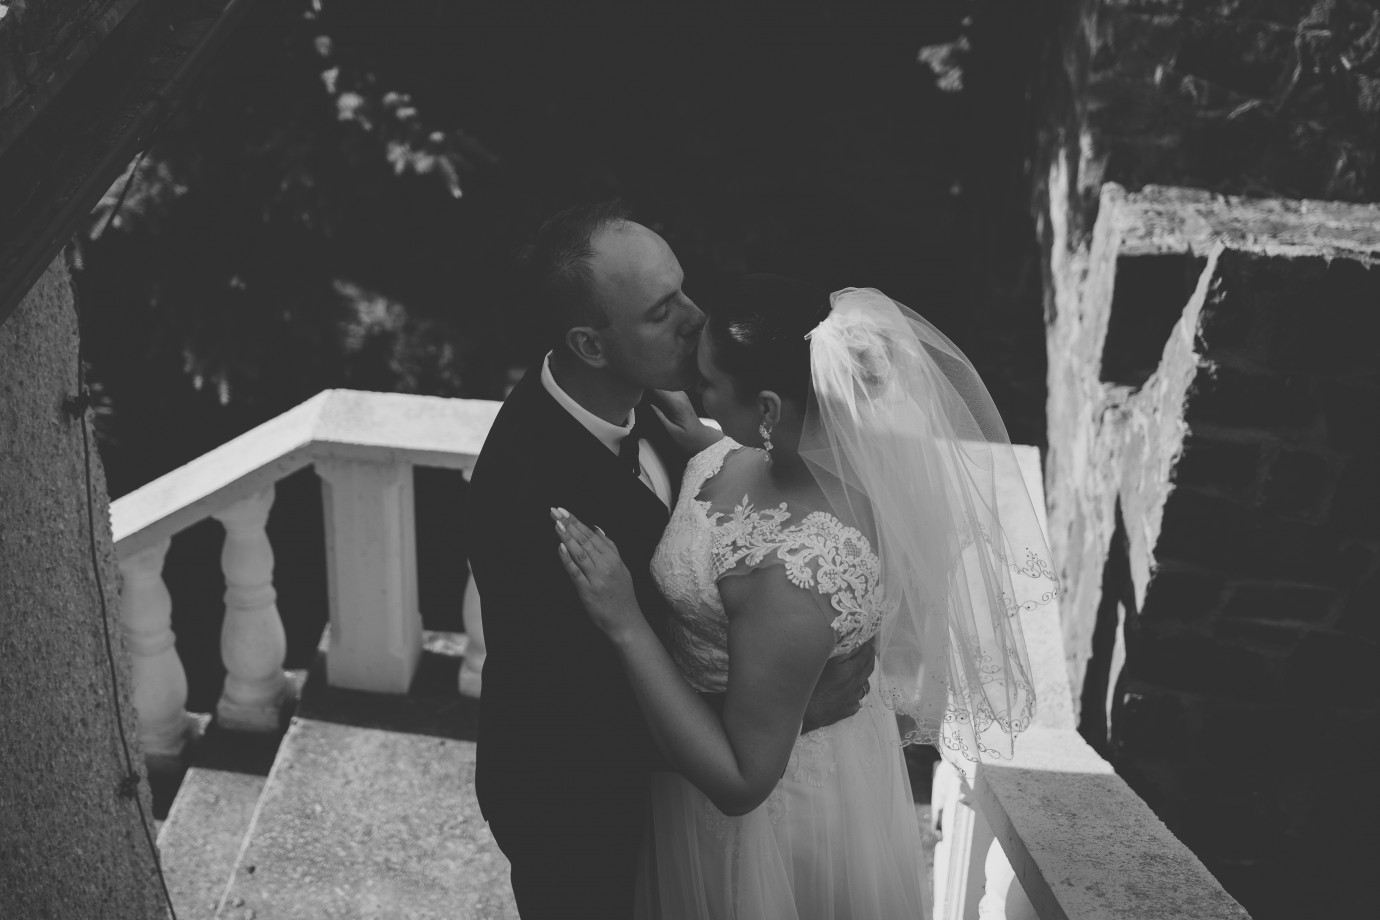 fotograf starachowice foto-image-sztandera portfolio zdjecia slubne inspiracje wesele plener slubny sesja slubna